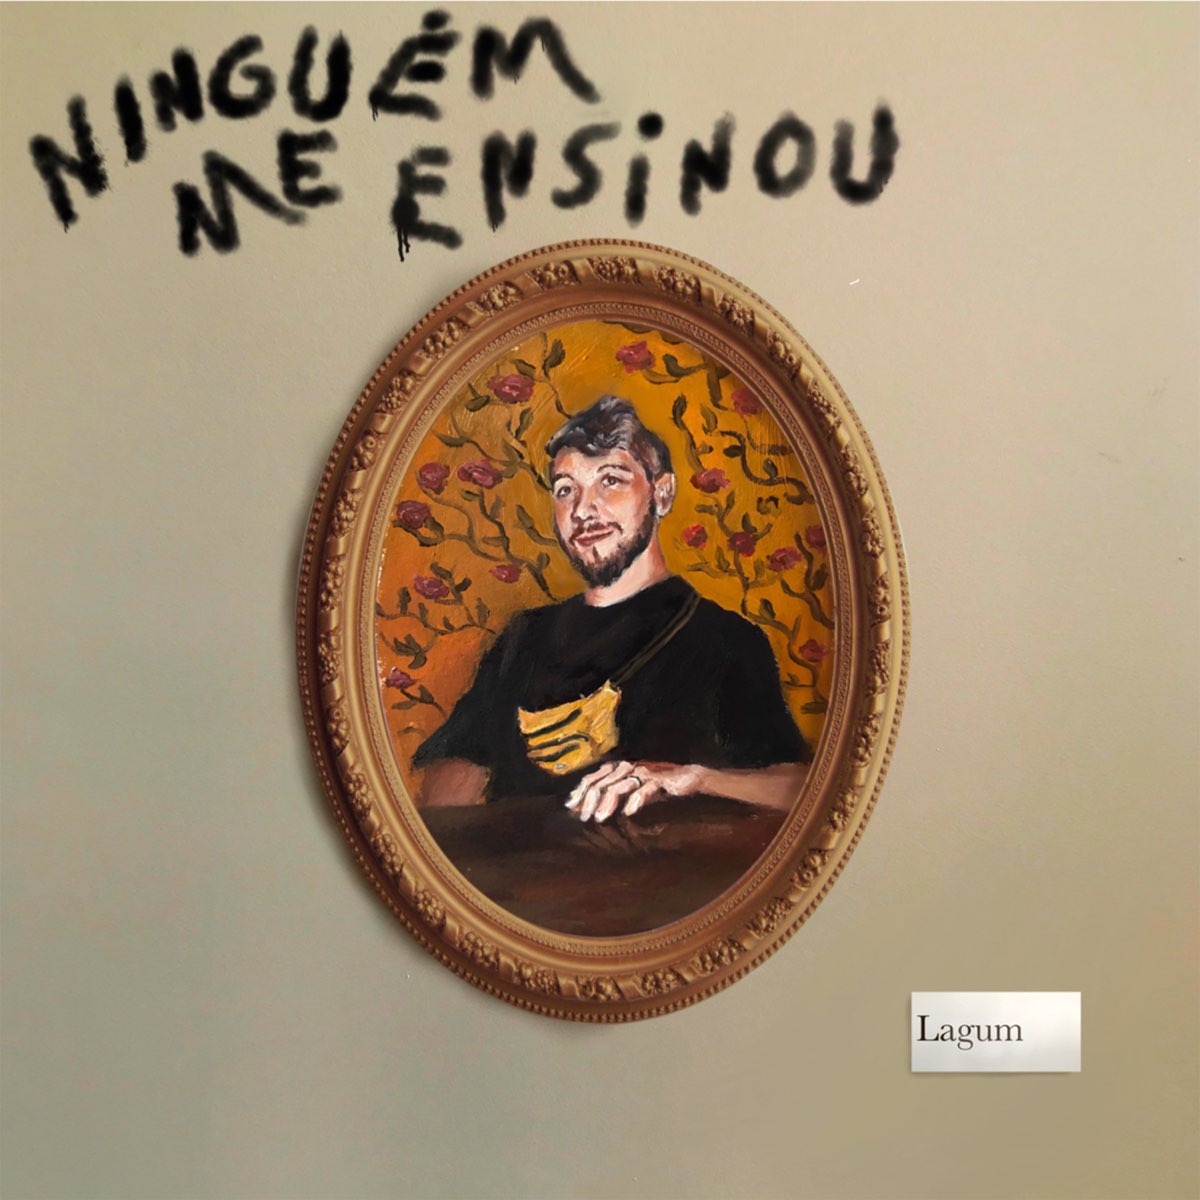 Lagum — NINGUÉM ME ENSINOU cover artwork